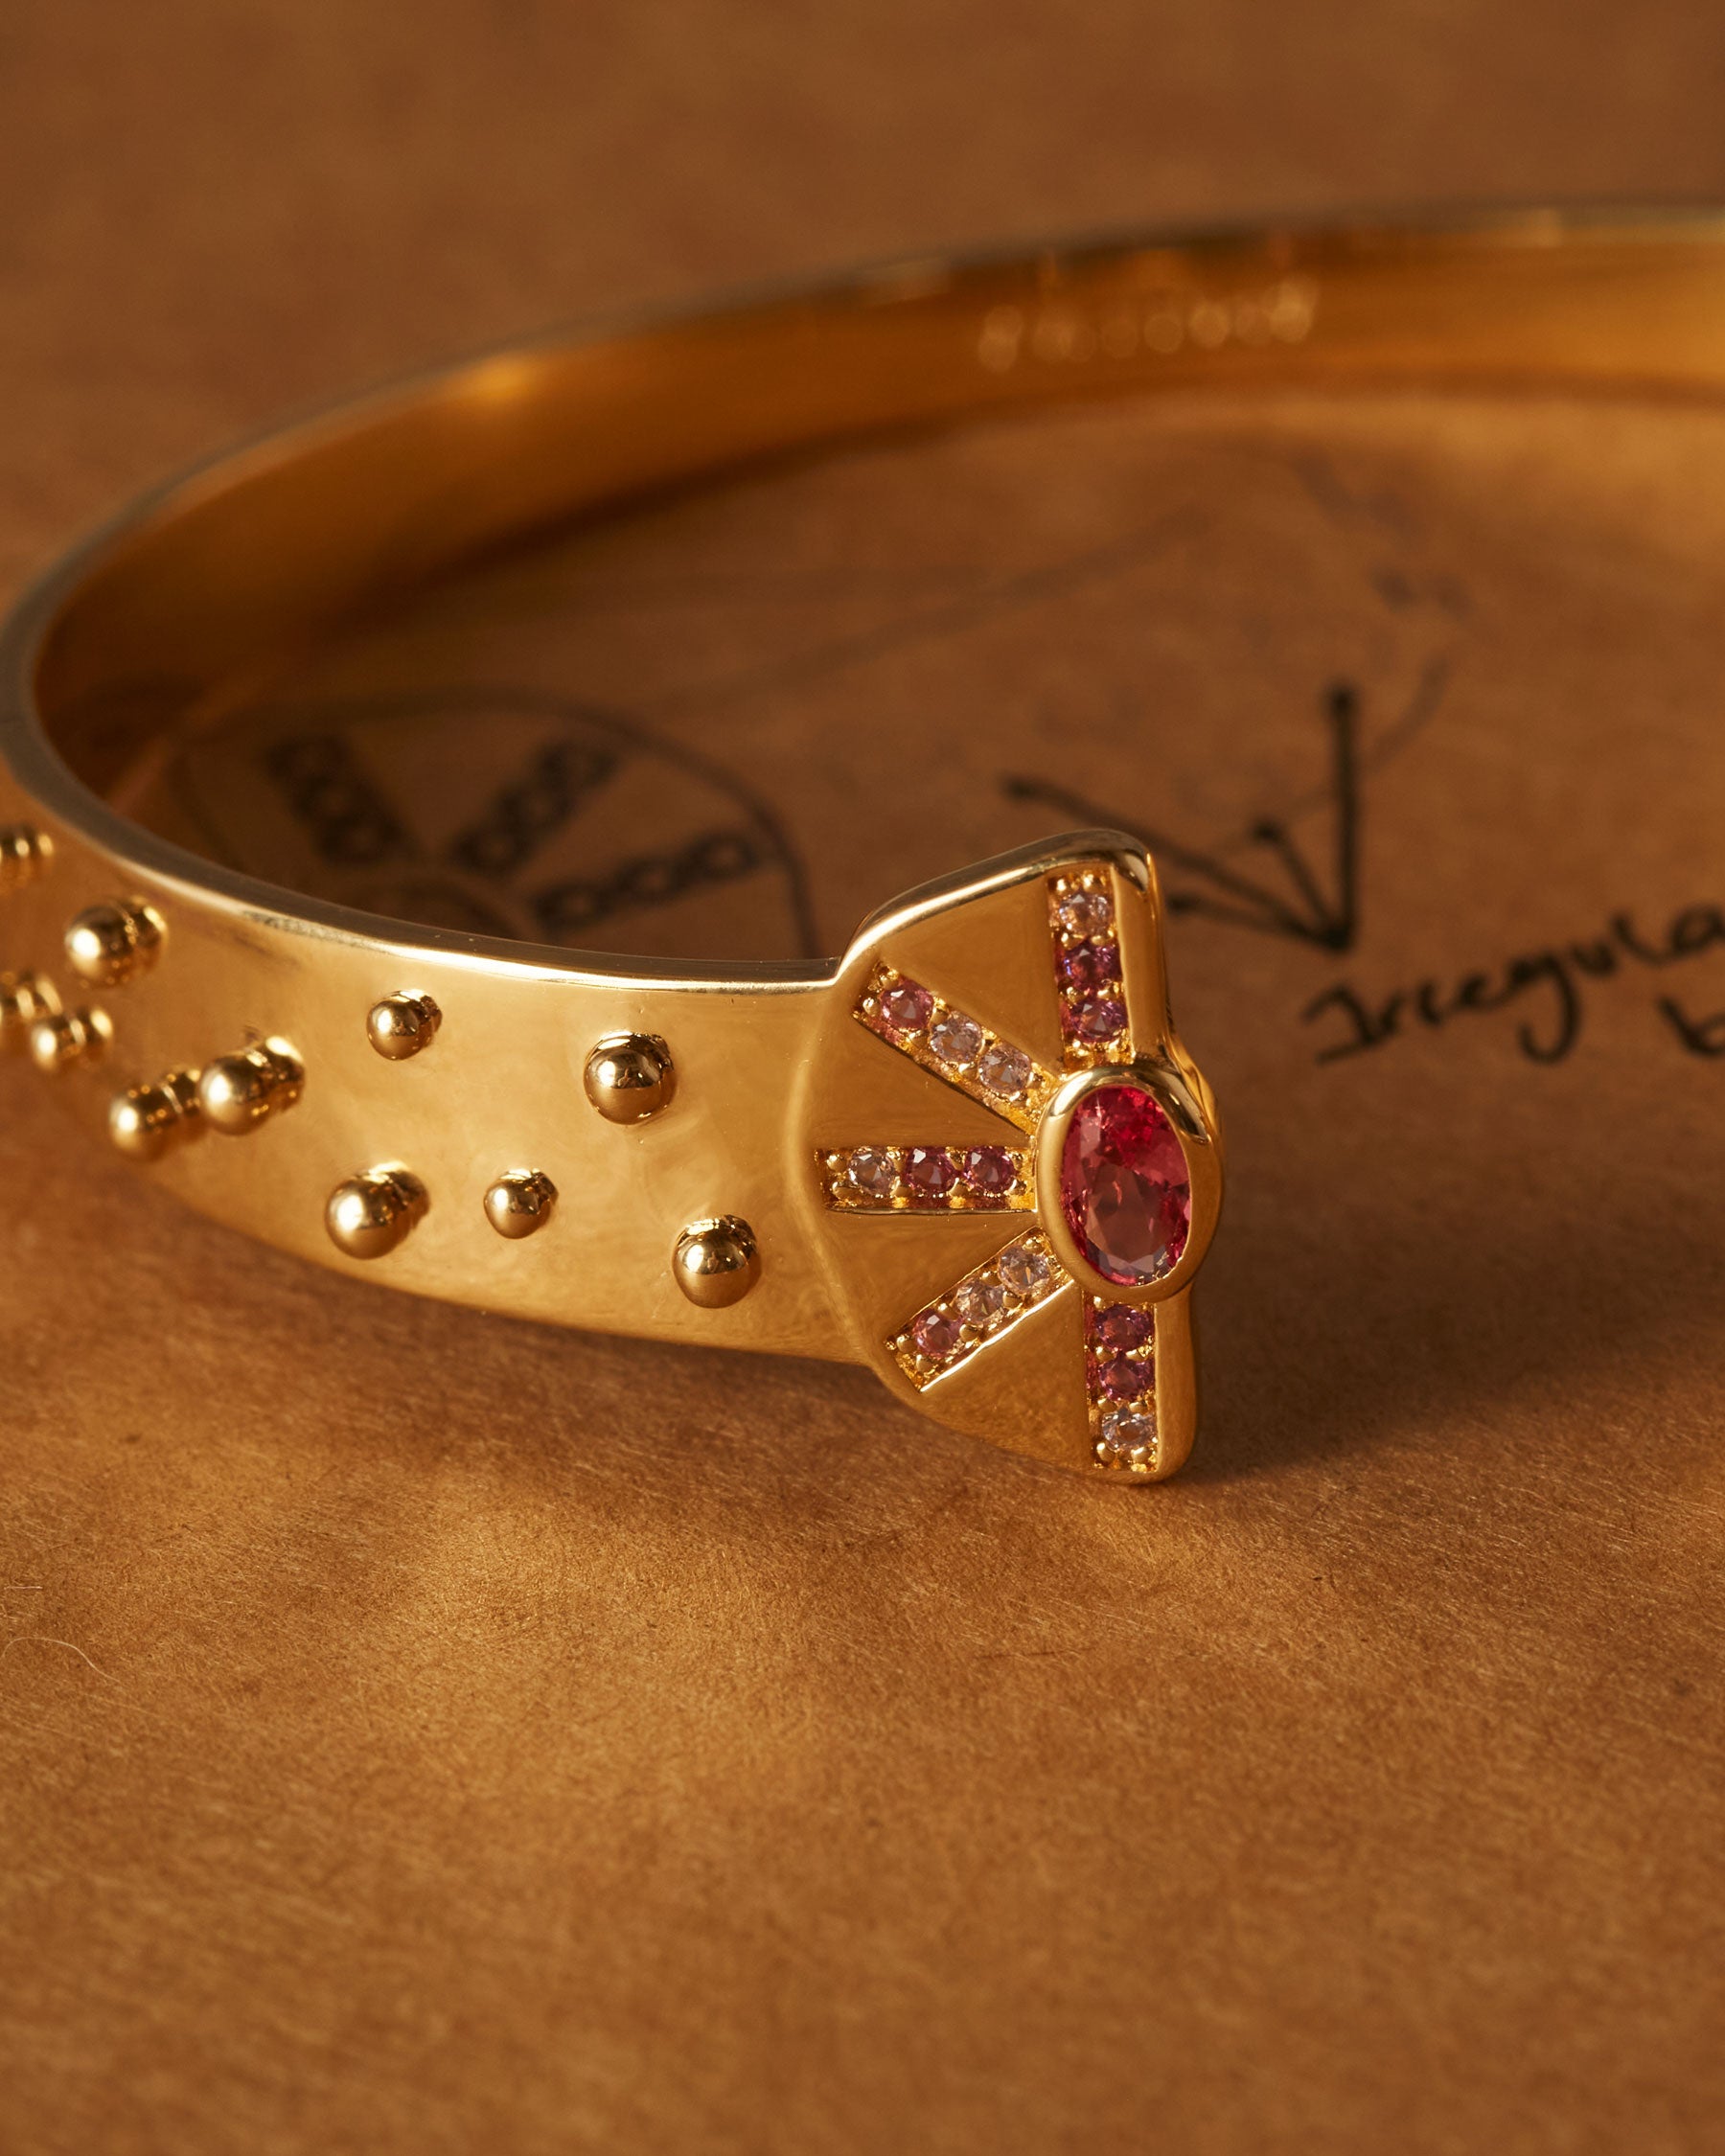 Royal Jewels of the World Message Board: Re: Queen Máxima's golden  butterflies